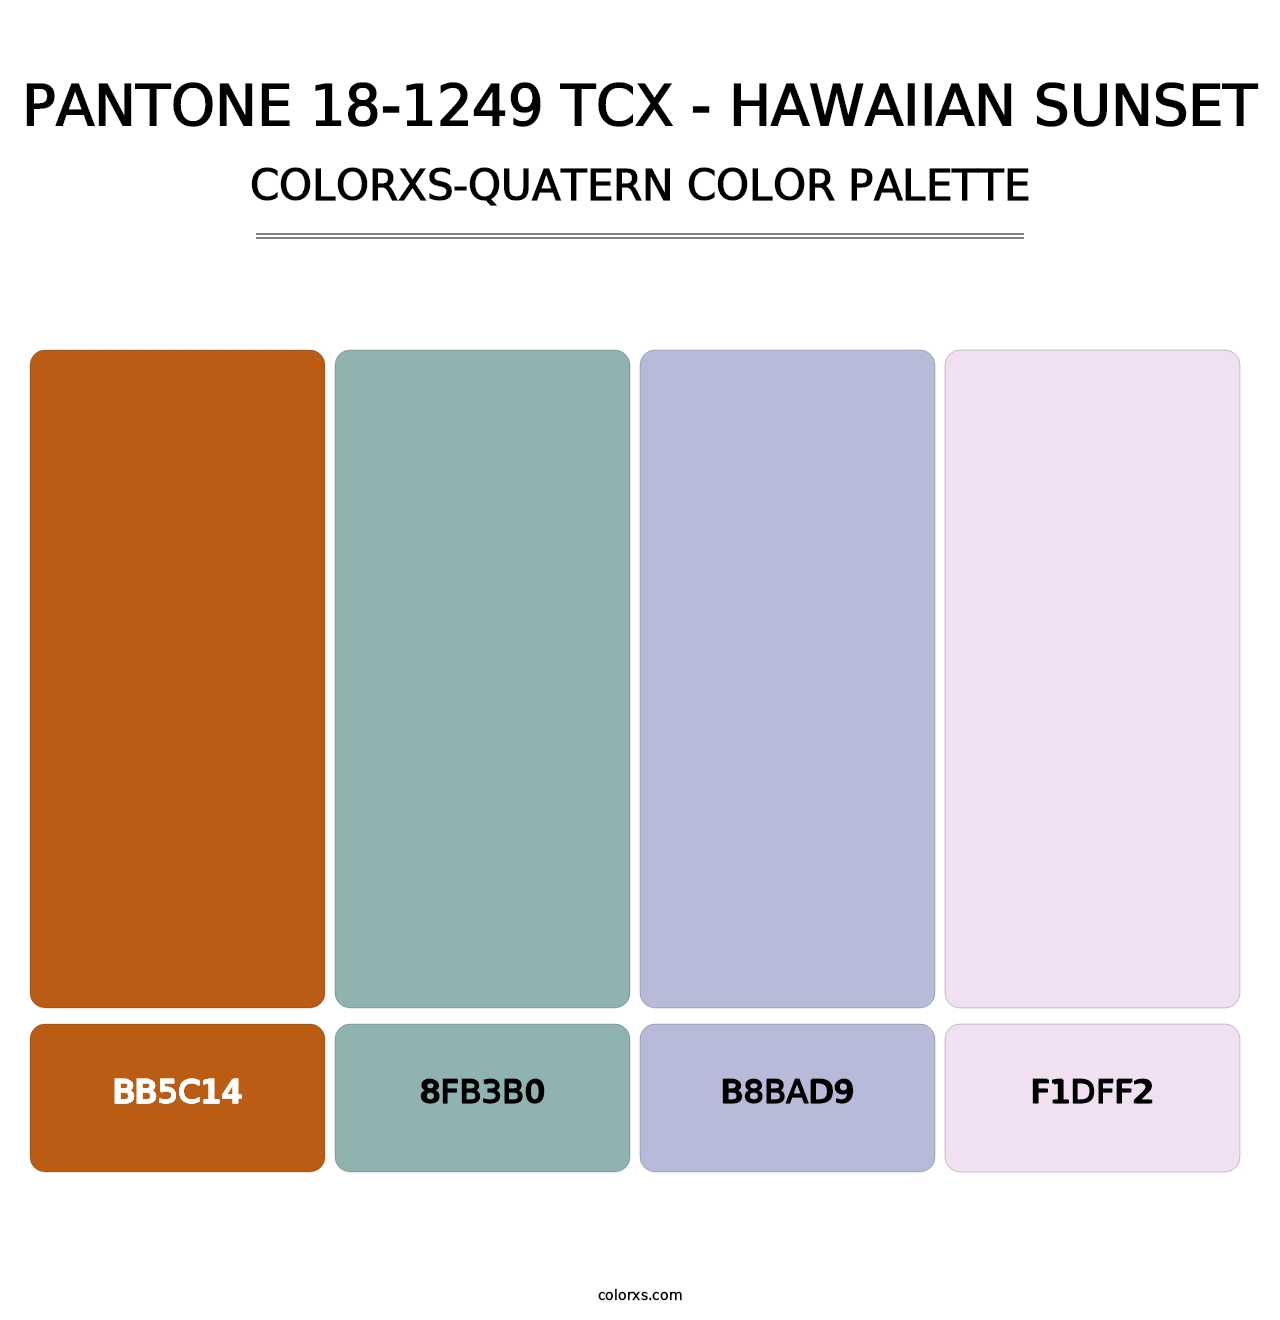 PANTONE 18-1249 TCX - Hawaiian Sunset - Colorxs Quatern Palette